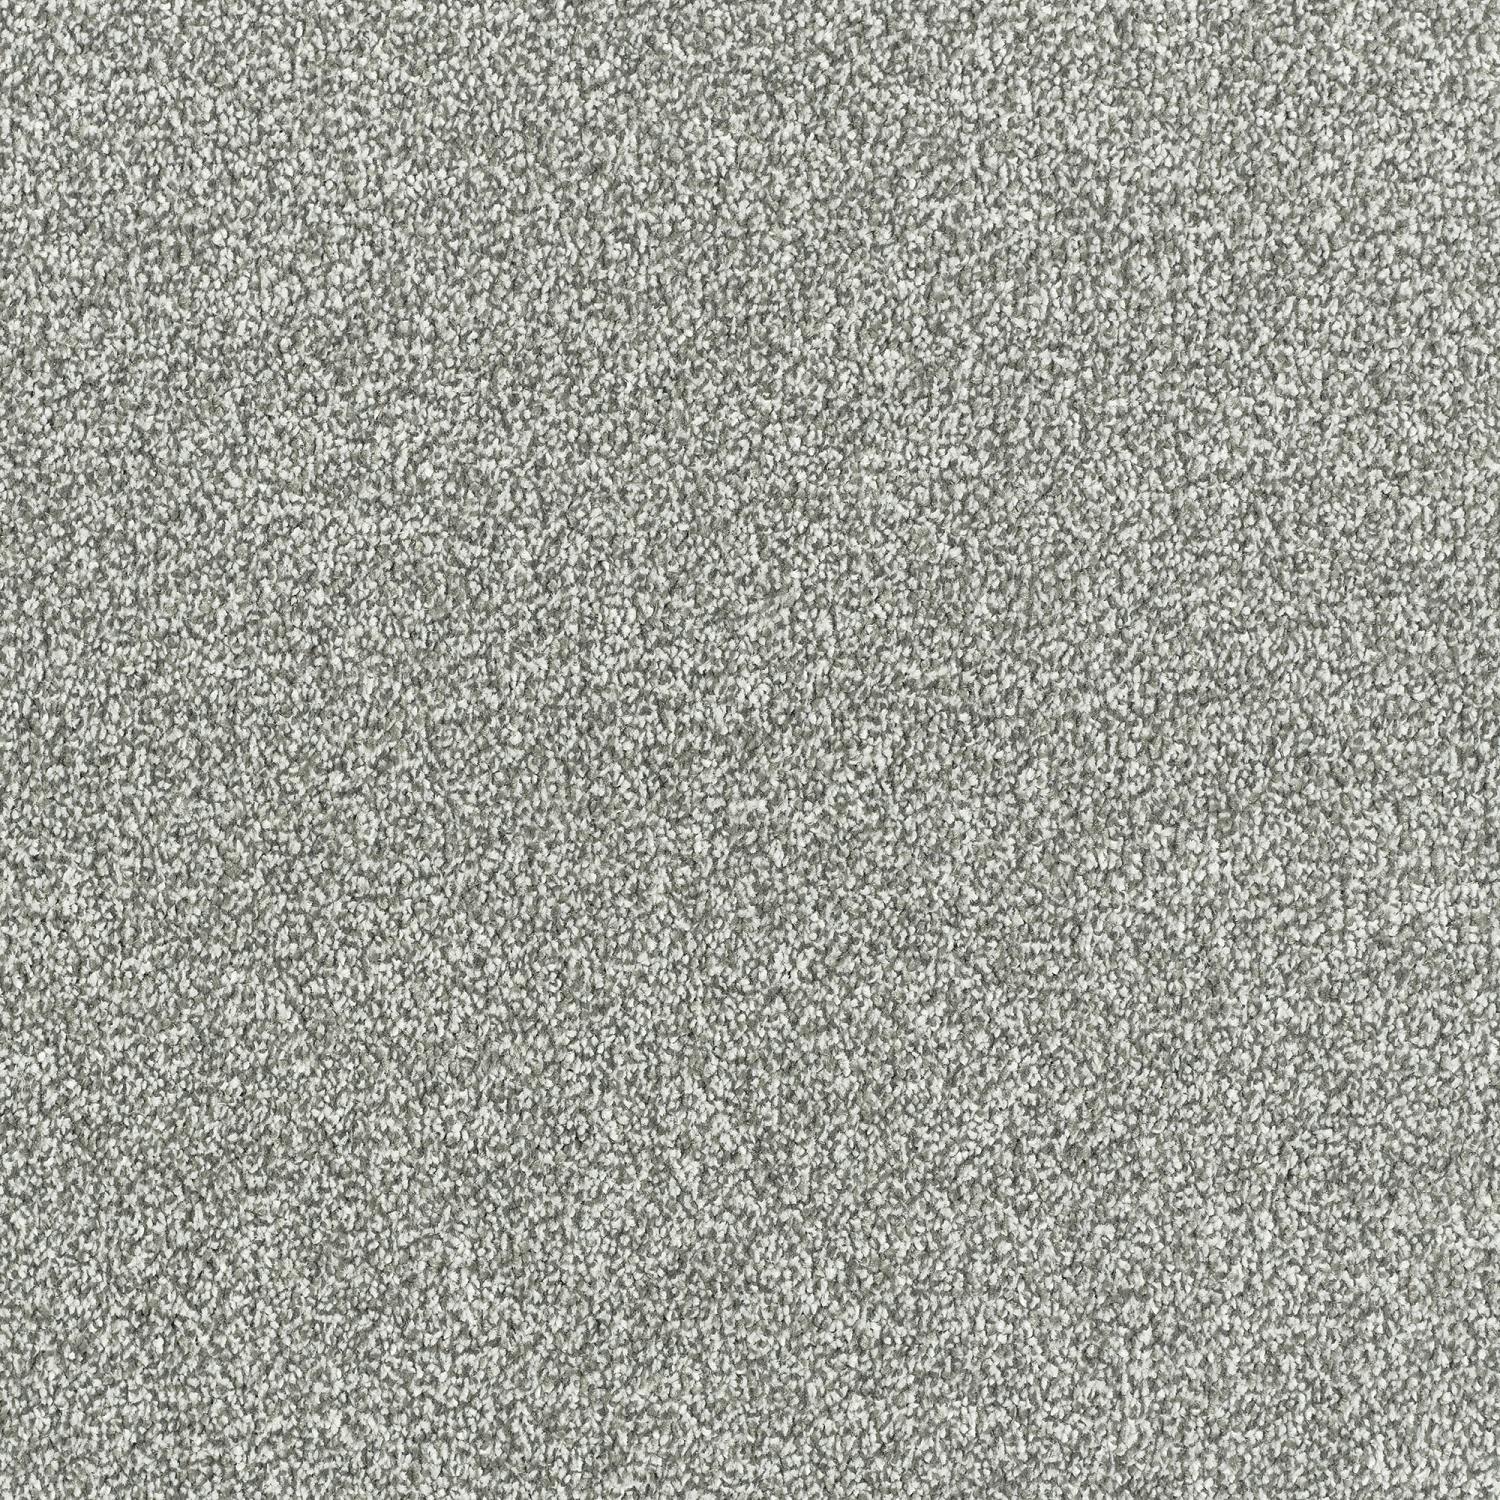 Stainfree Maximus Saxony Carpet - French Grey